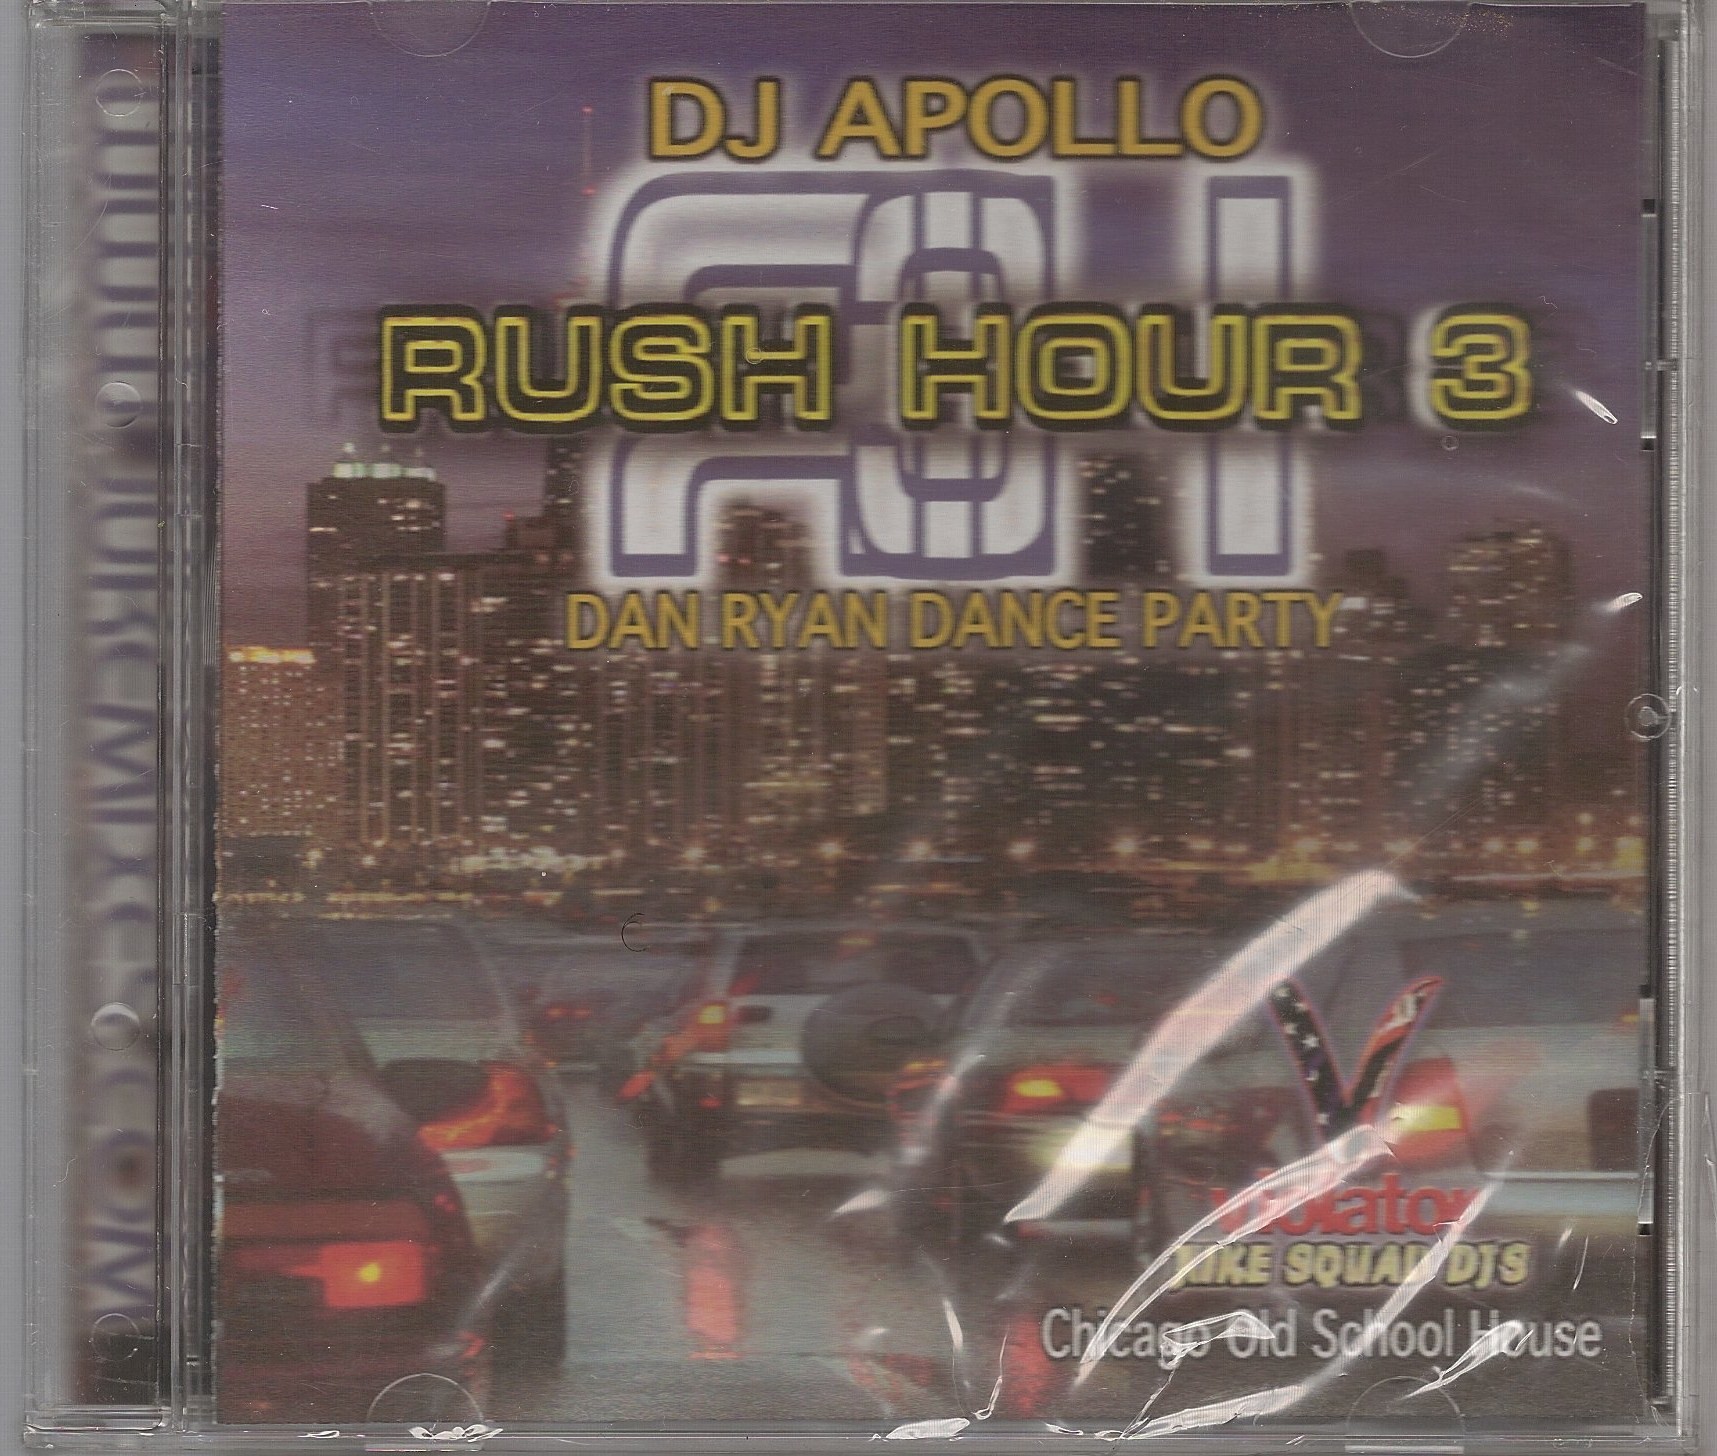 DJ APOLLO - RUSH HOUR 3